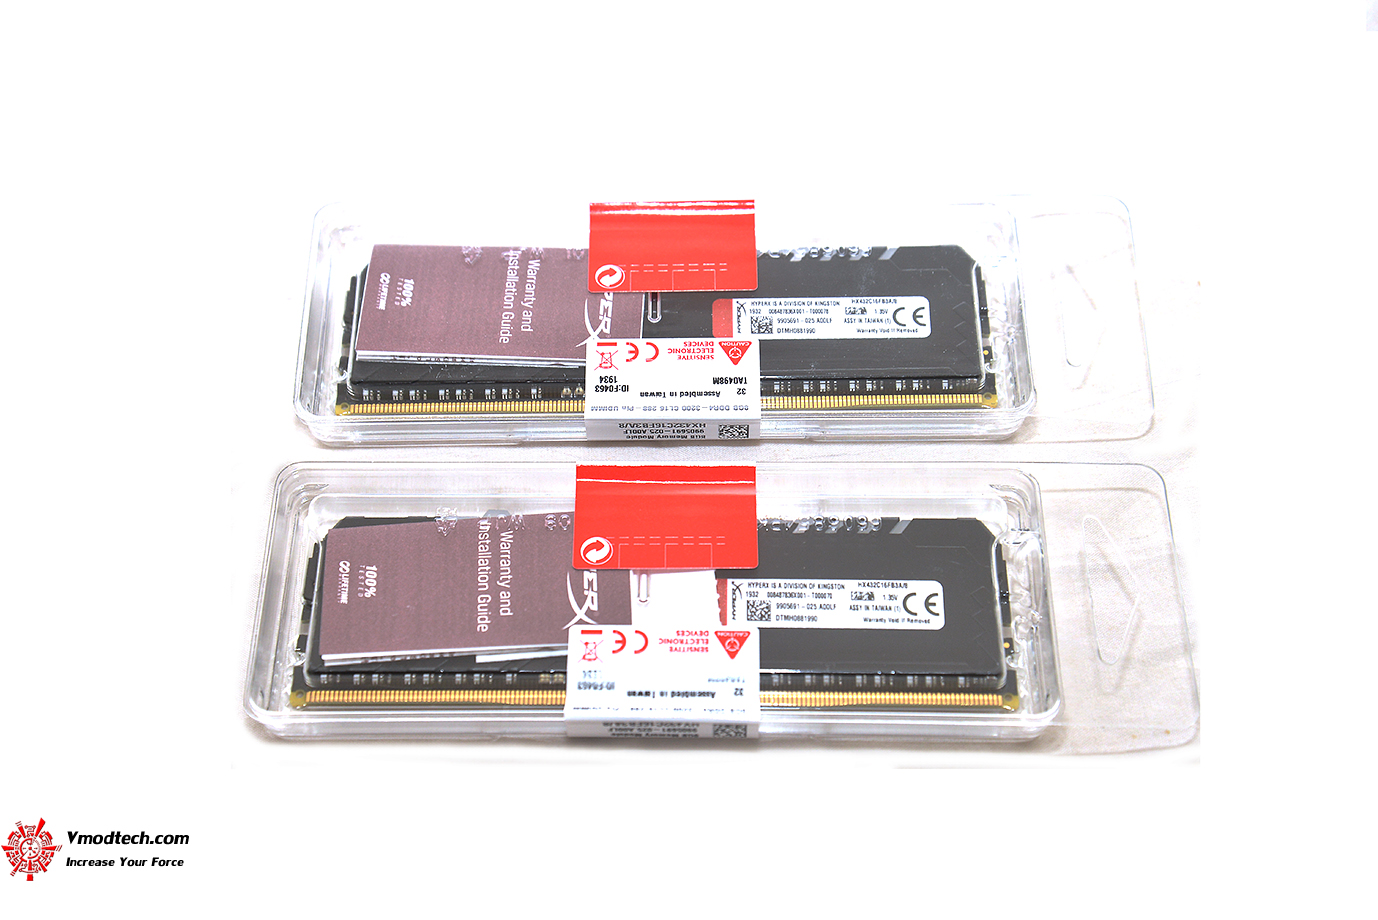 dsc 9493 HyperX FURY DDR4 RGB 3200MHz 16 18 18 1.35V 8GBX4 32GB REVIEW